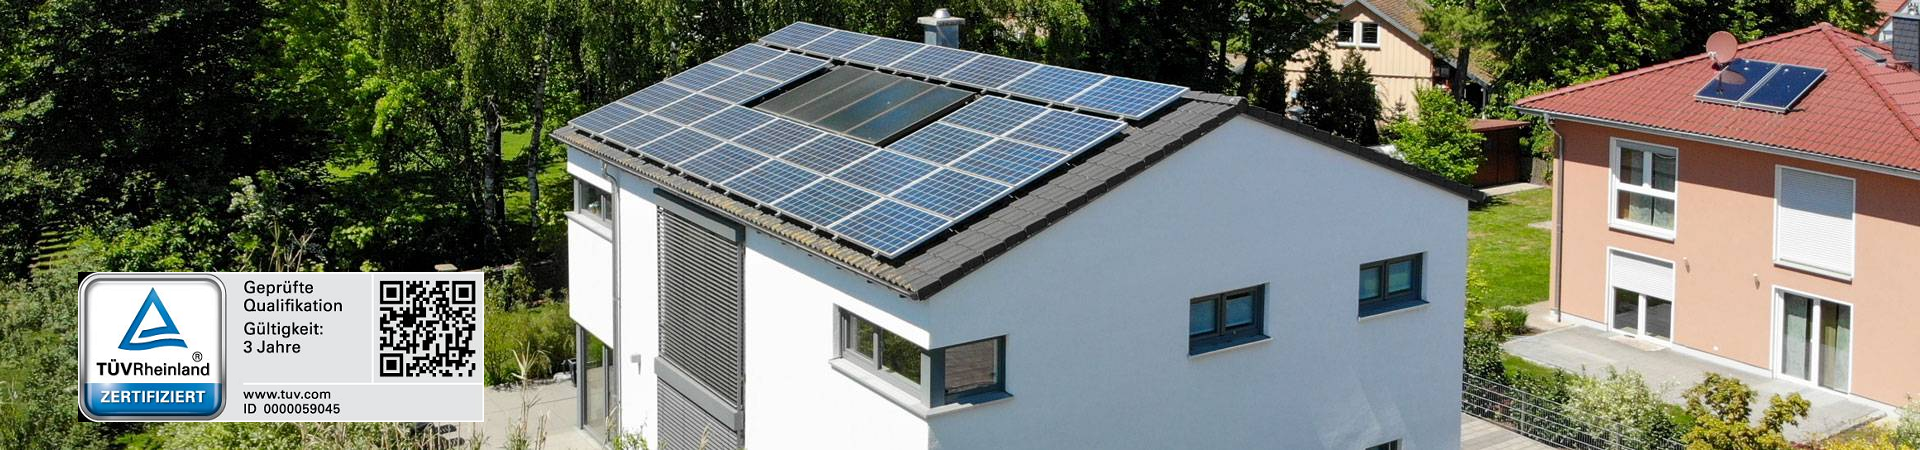 photovoltaik warendorf